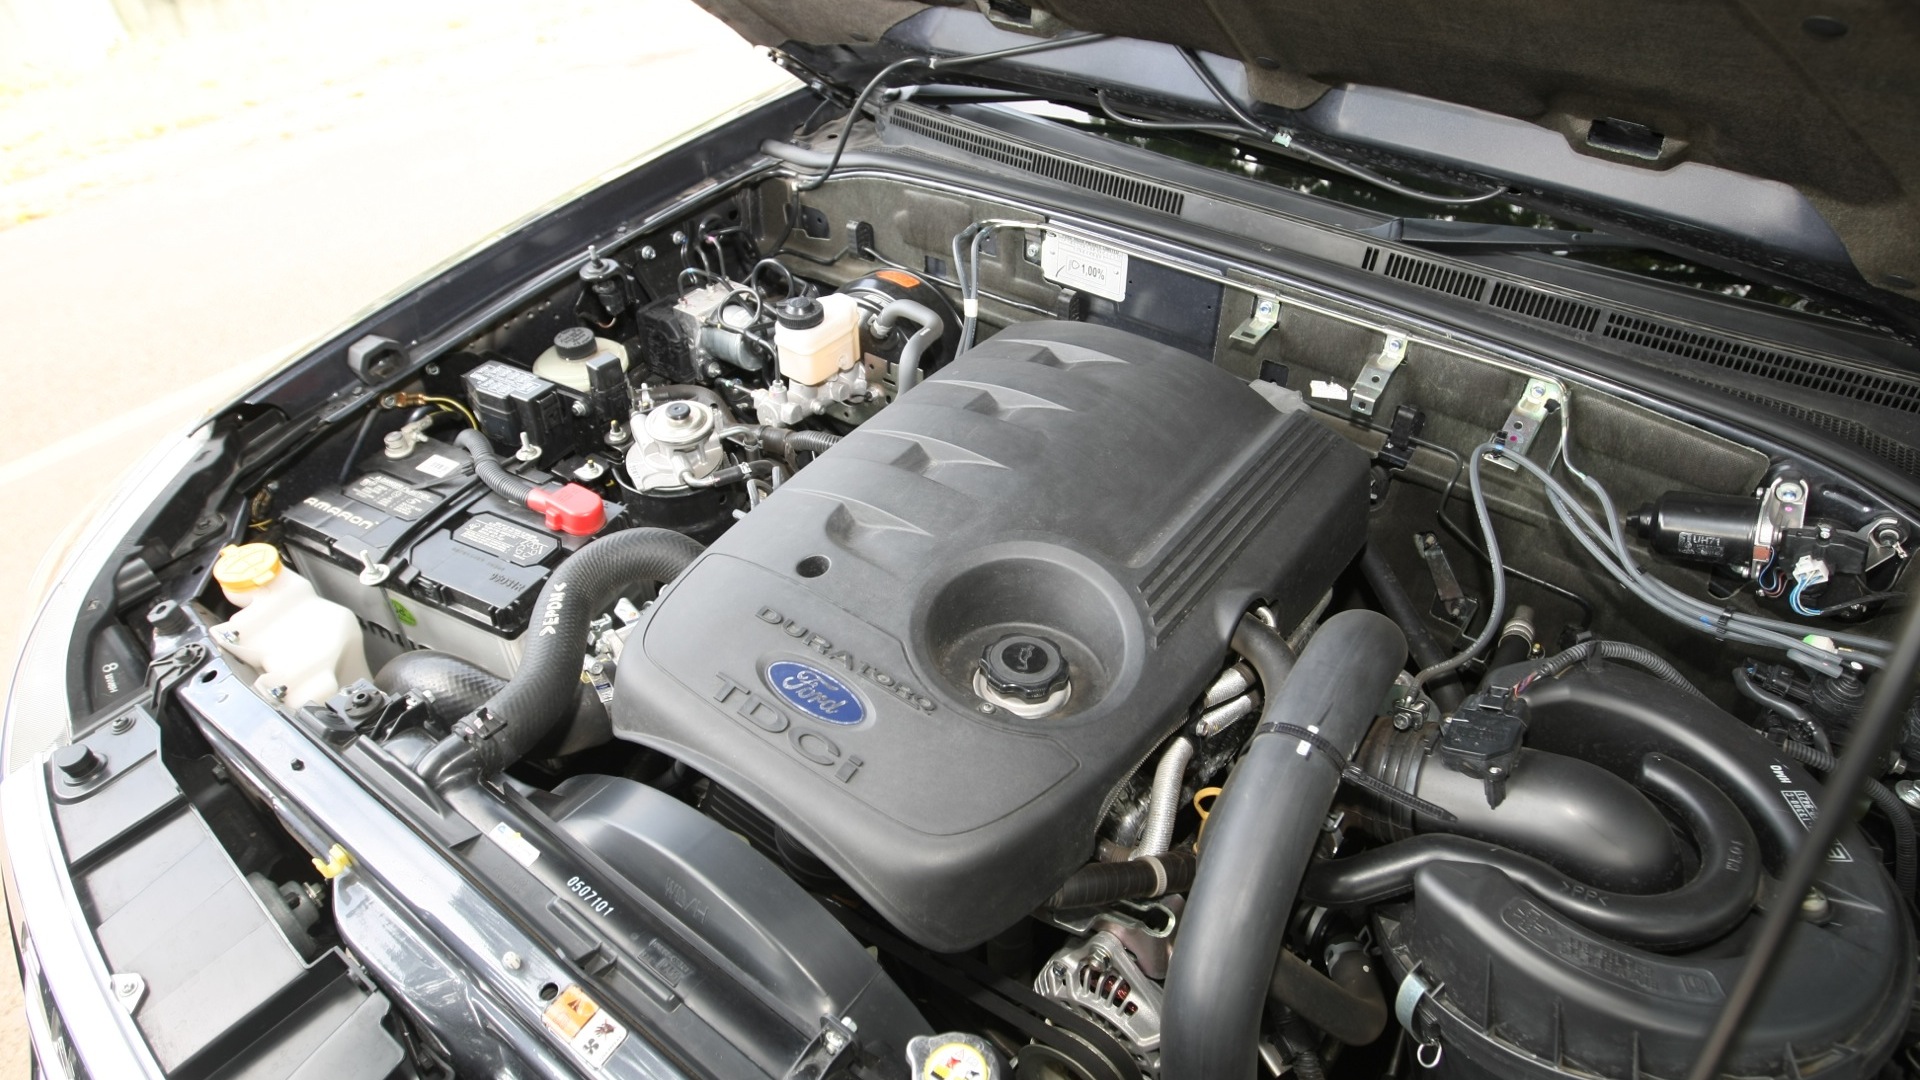 Ford-Endeavour-2012-TDCi-4x2-2-5-XLT-Interior